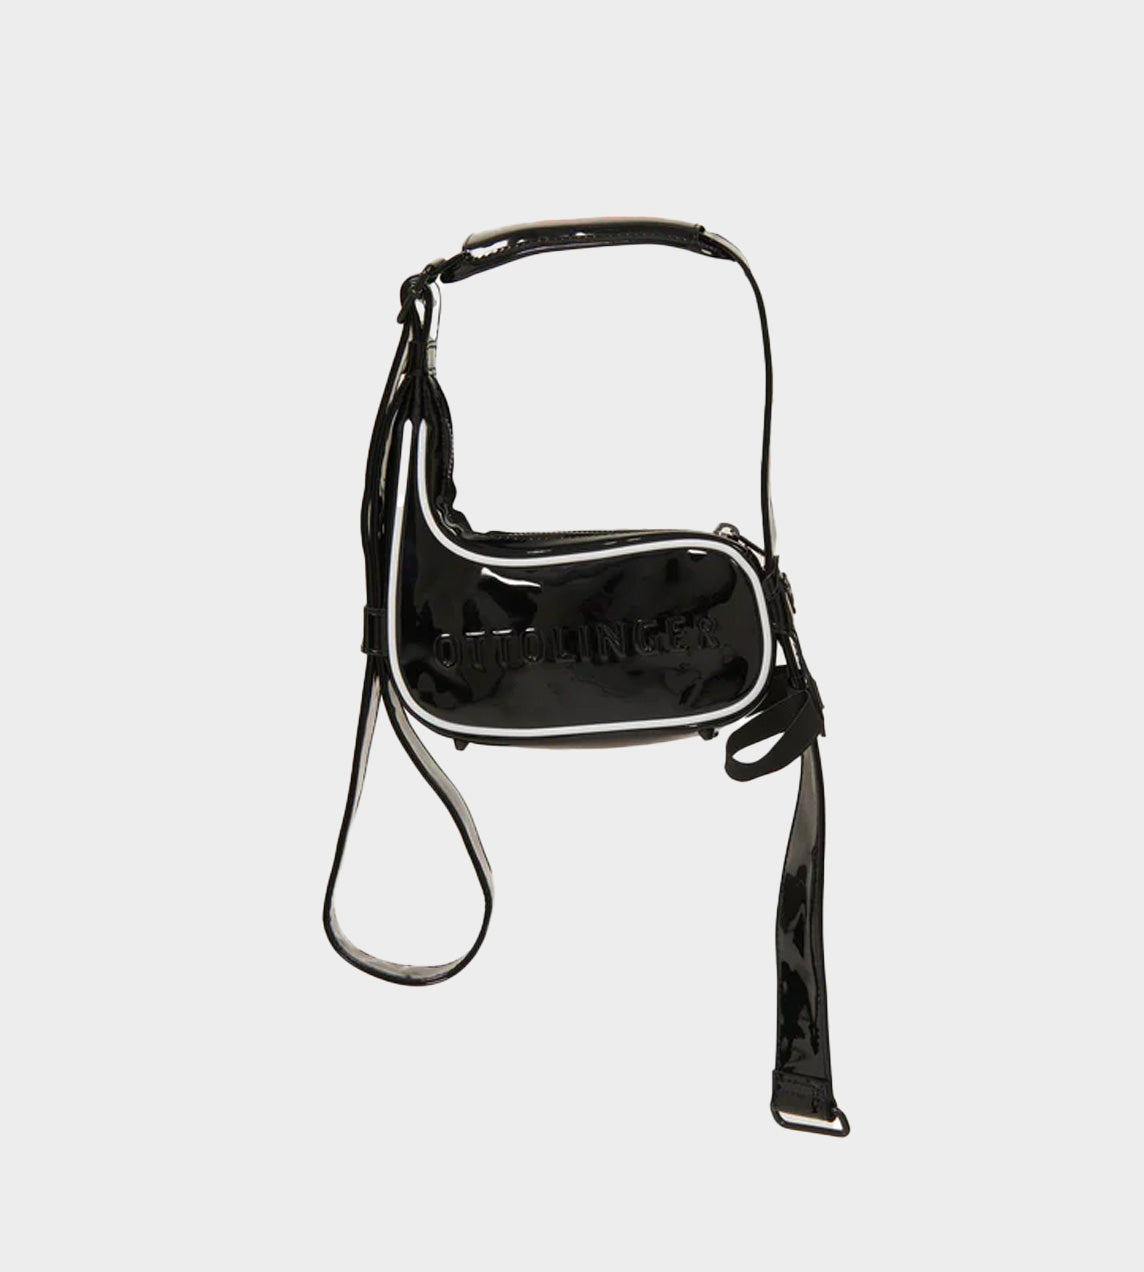 Puma X Ottolinger Small Bag Black